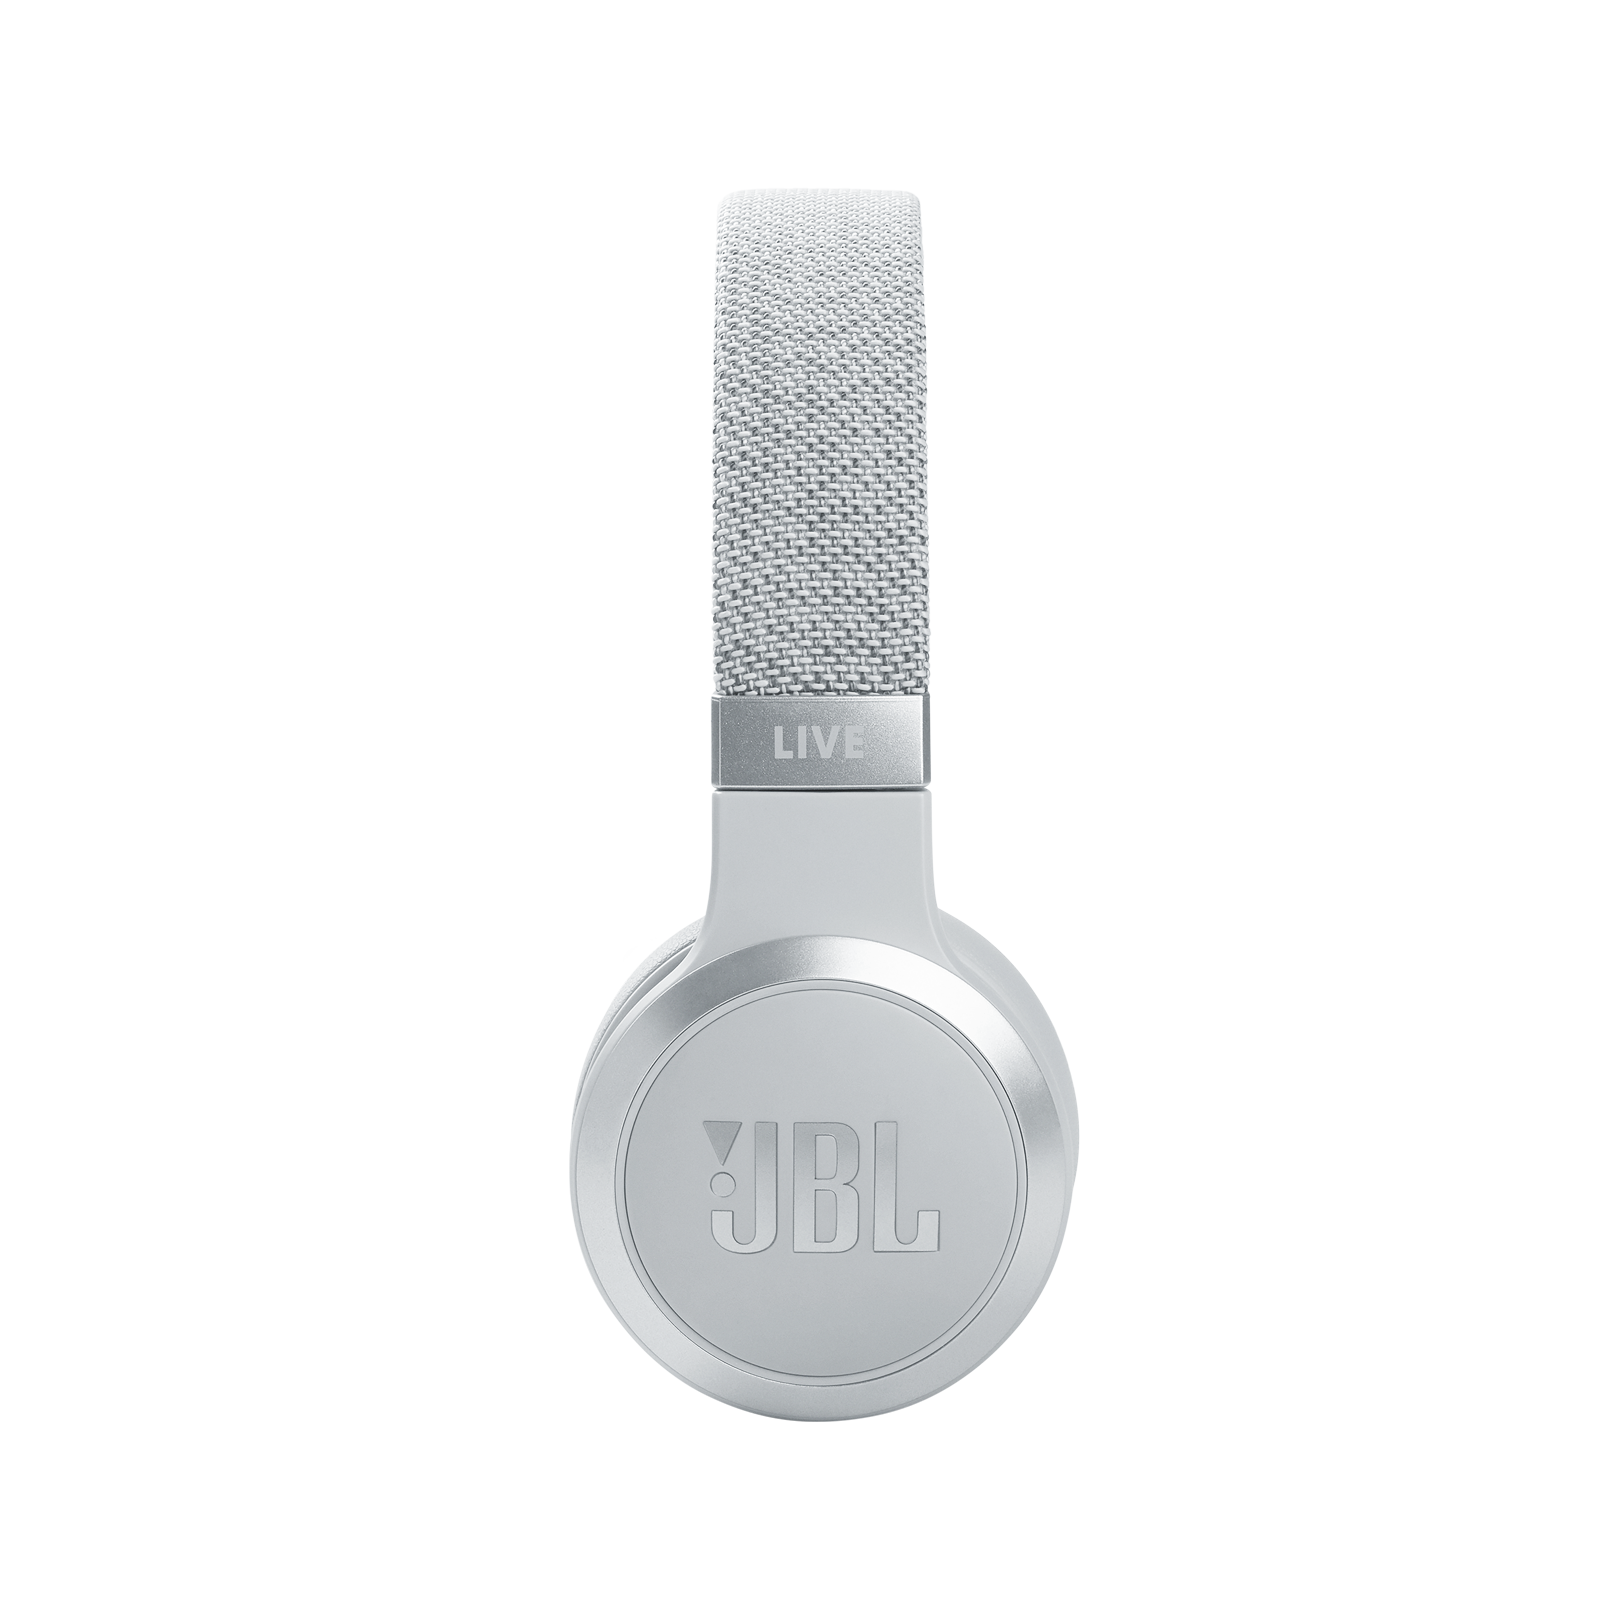 JBL Live 460NC - White - Wireless on-ear NC headphones - Detailshot 1